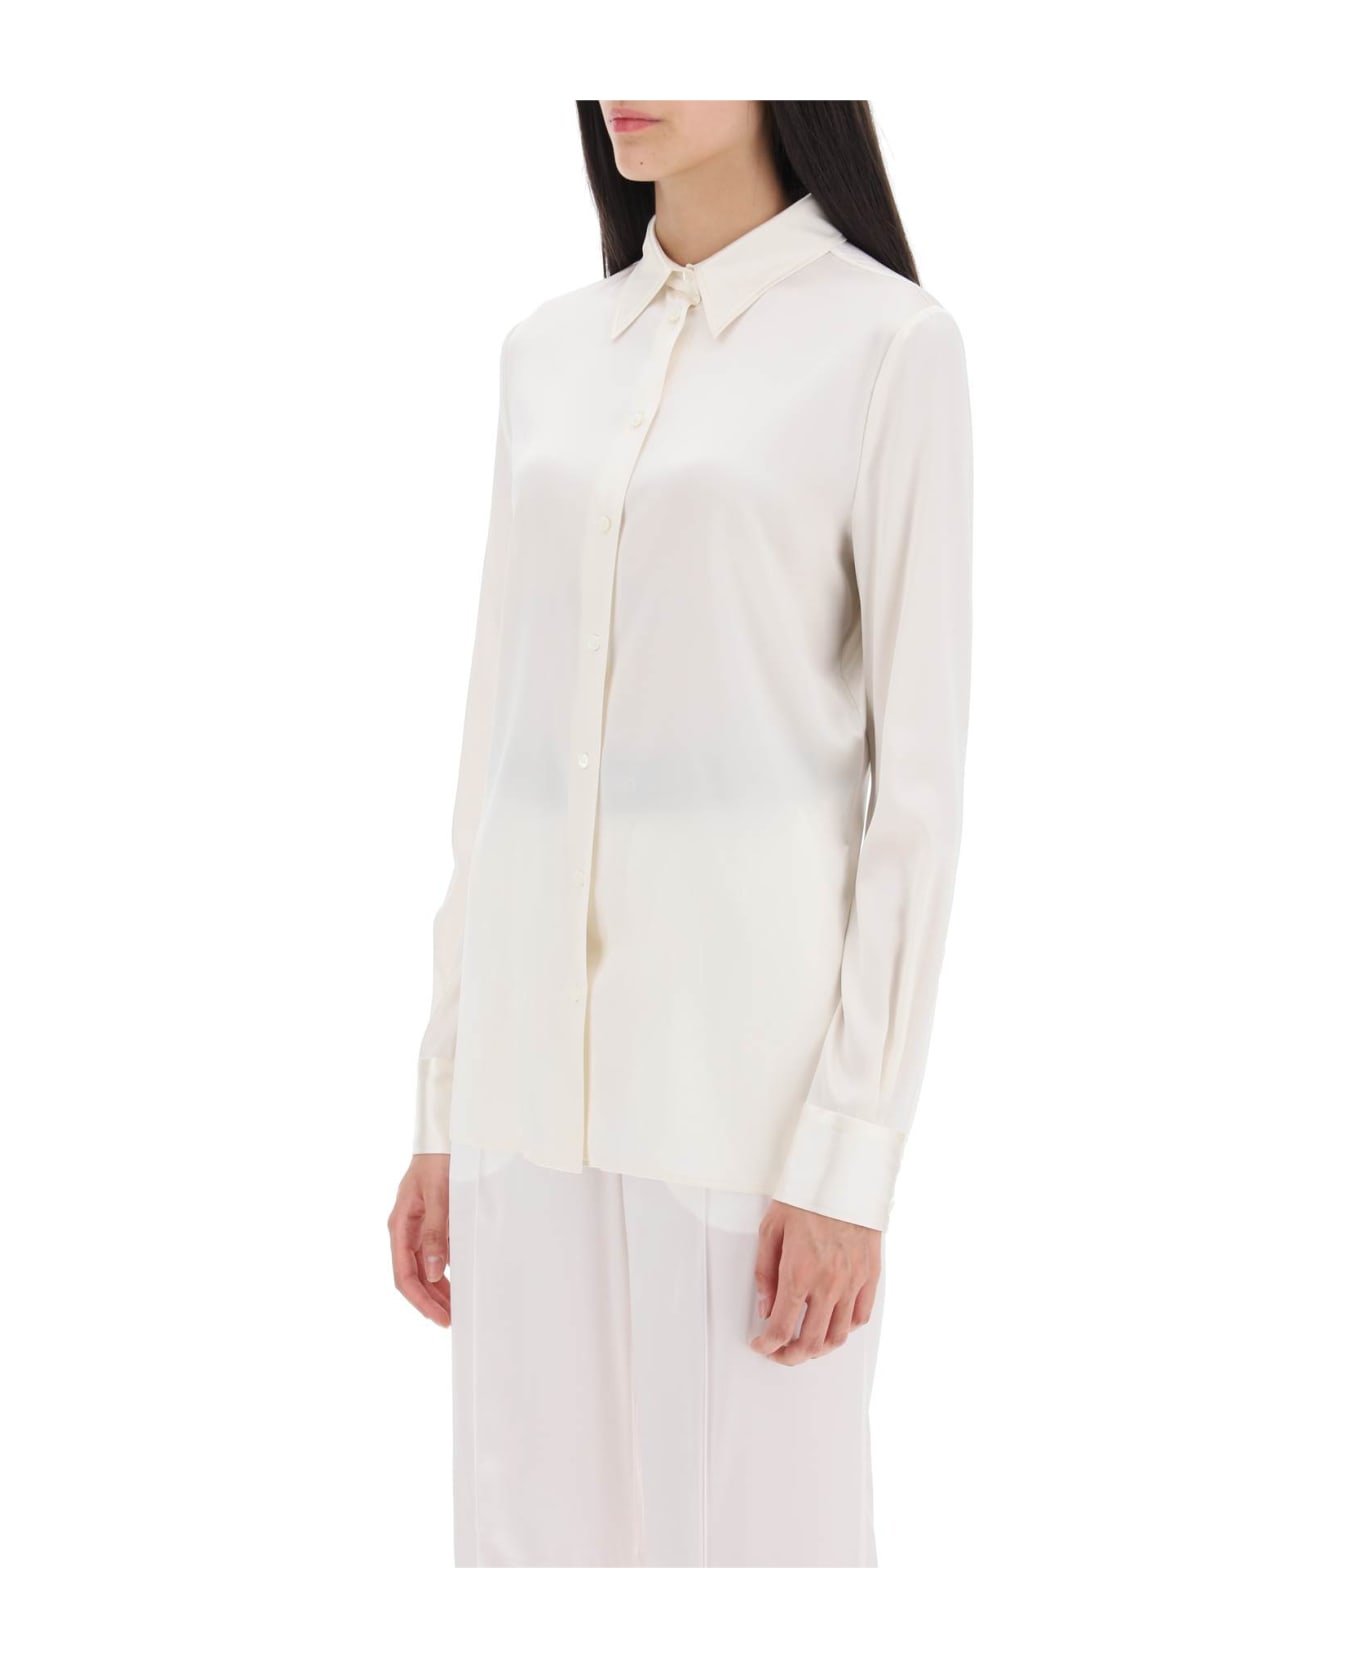 Tom Ford Silk Satin Shirt - CHALK (White)